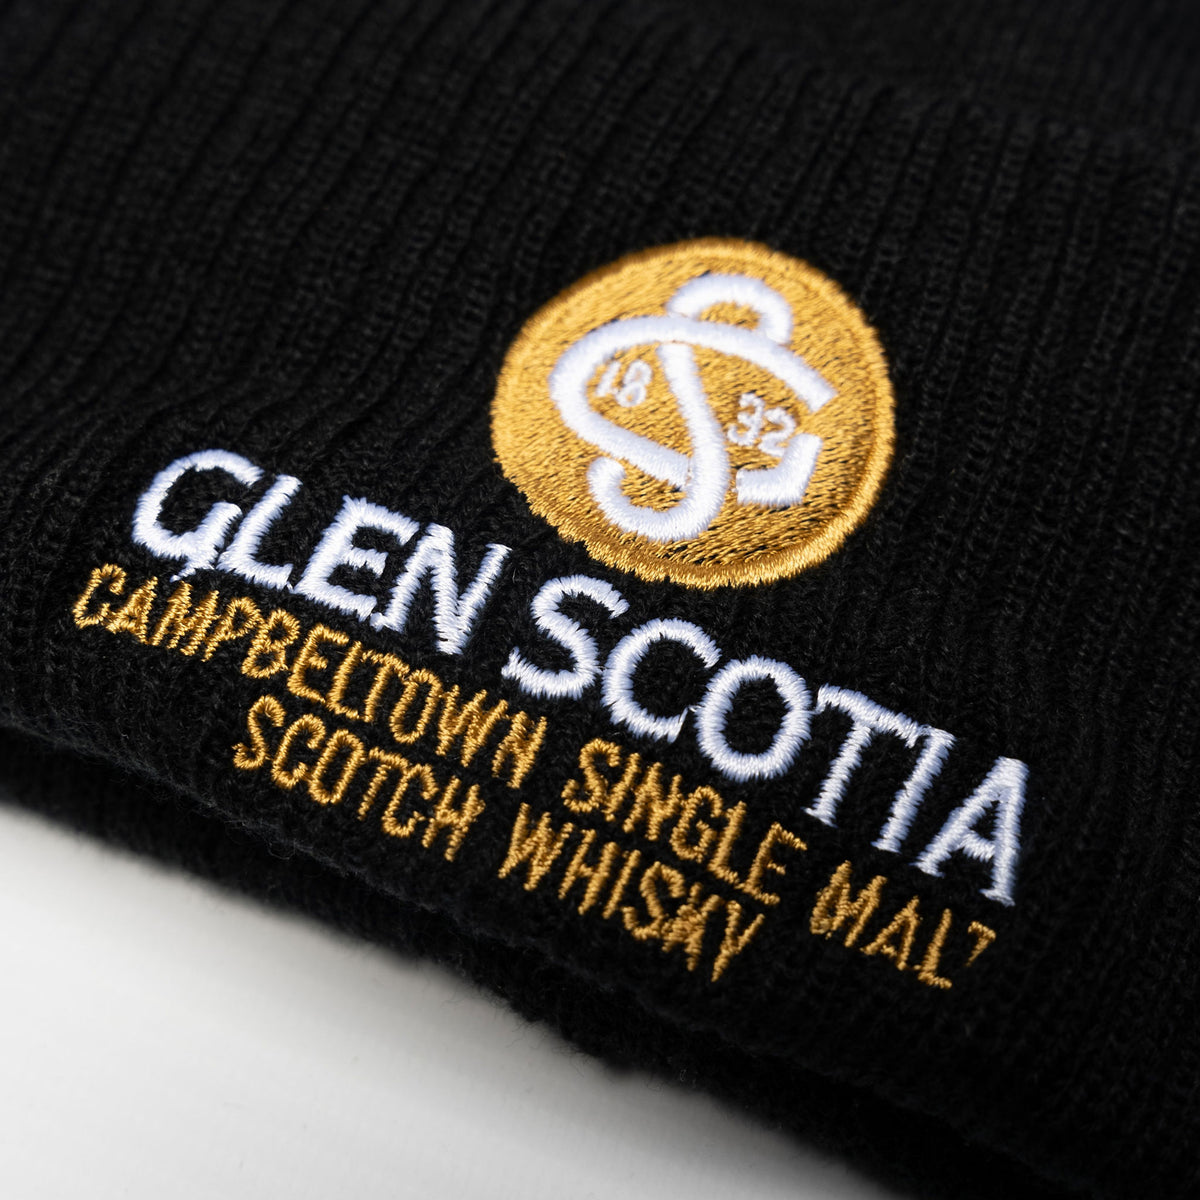 Glen Scotia Beanie Bobble Hat close up 